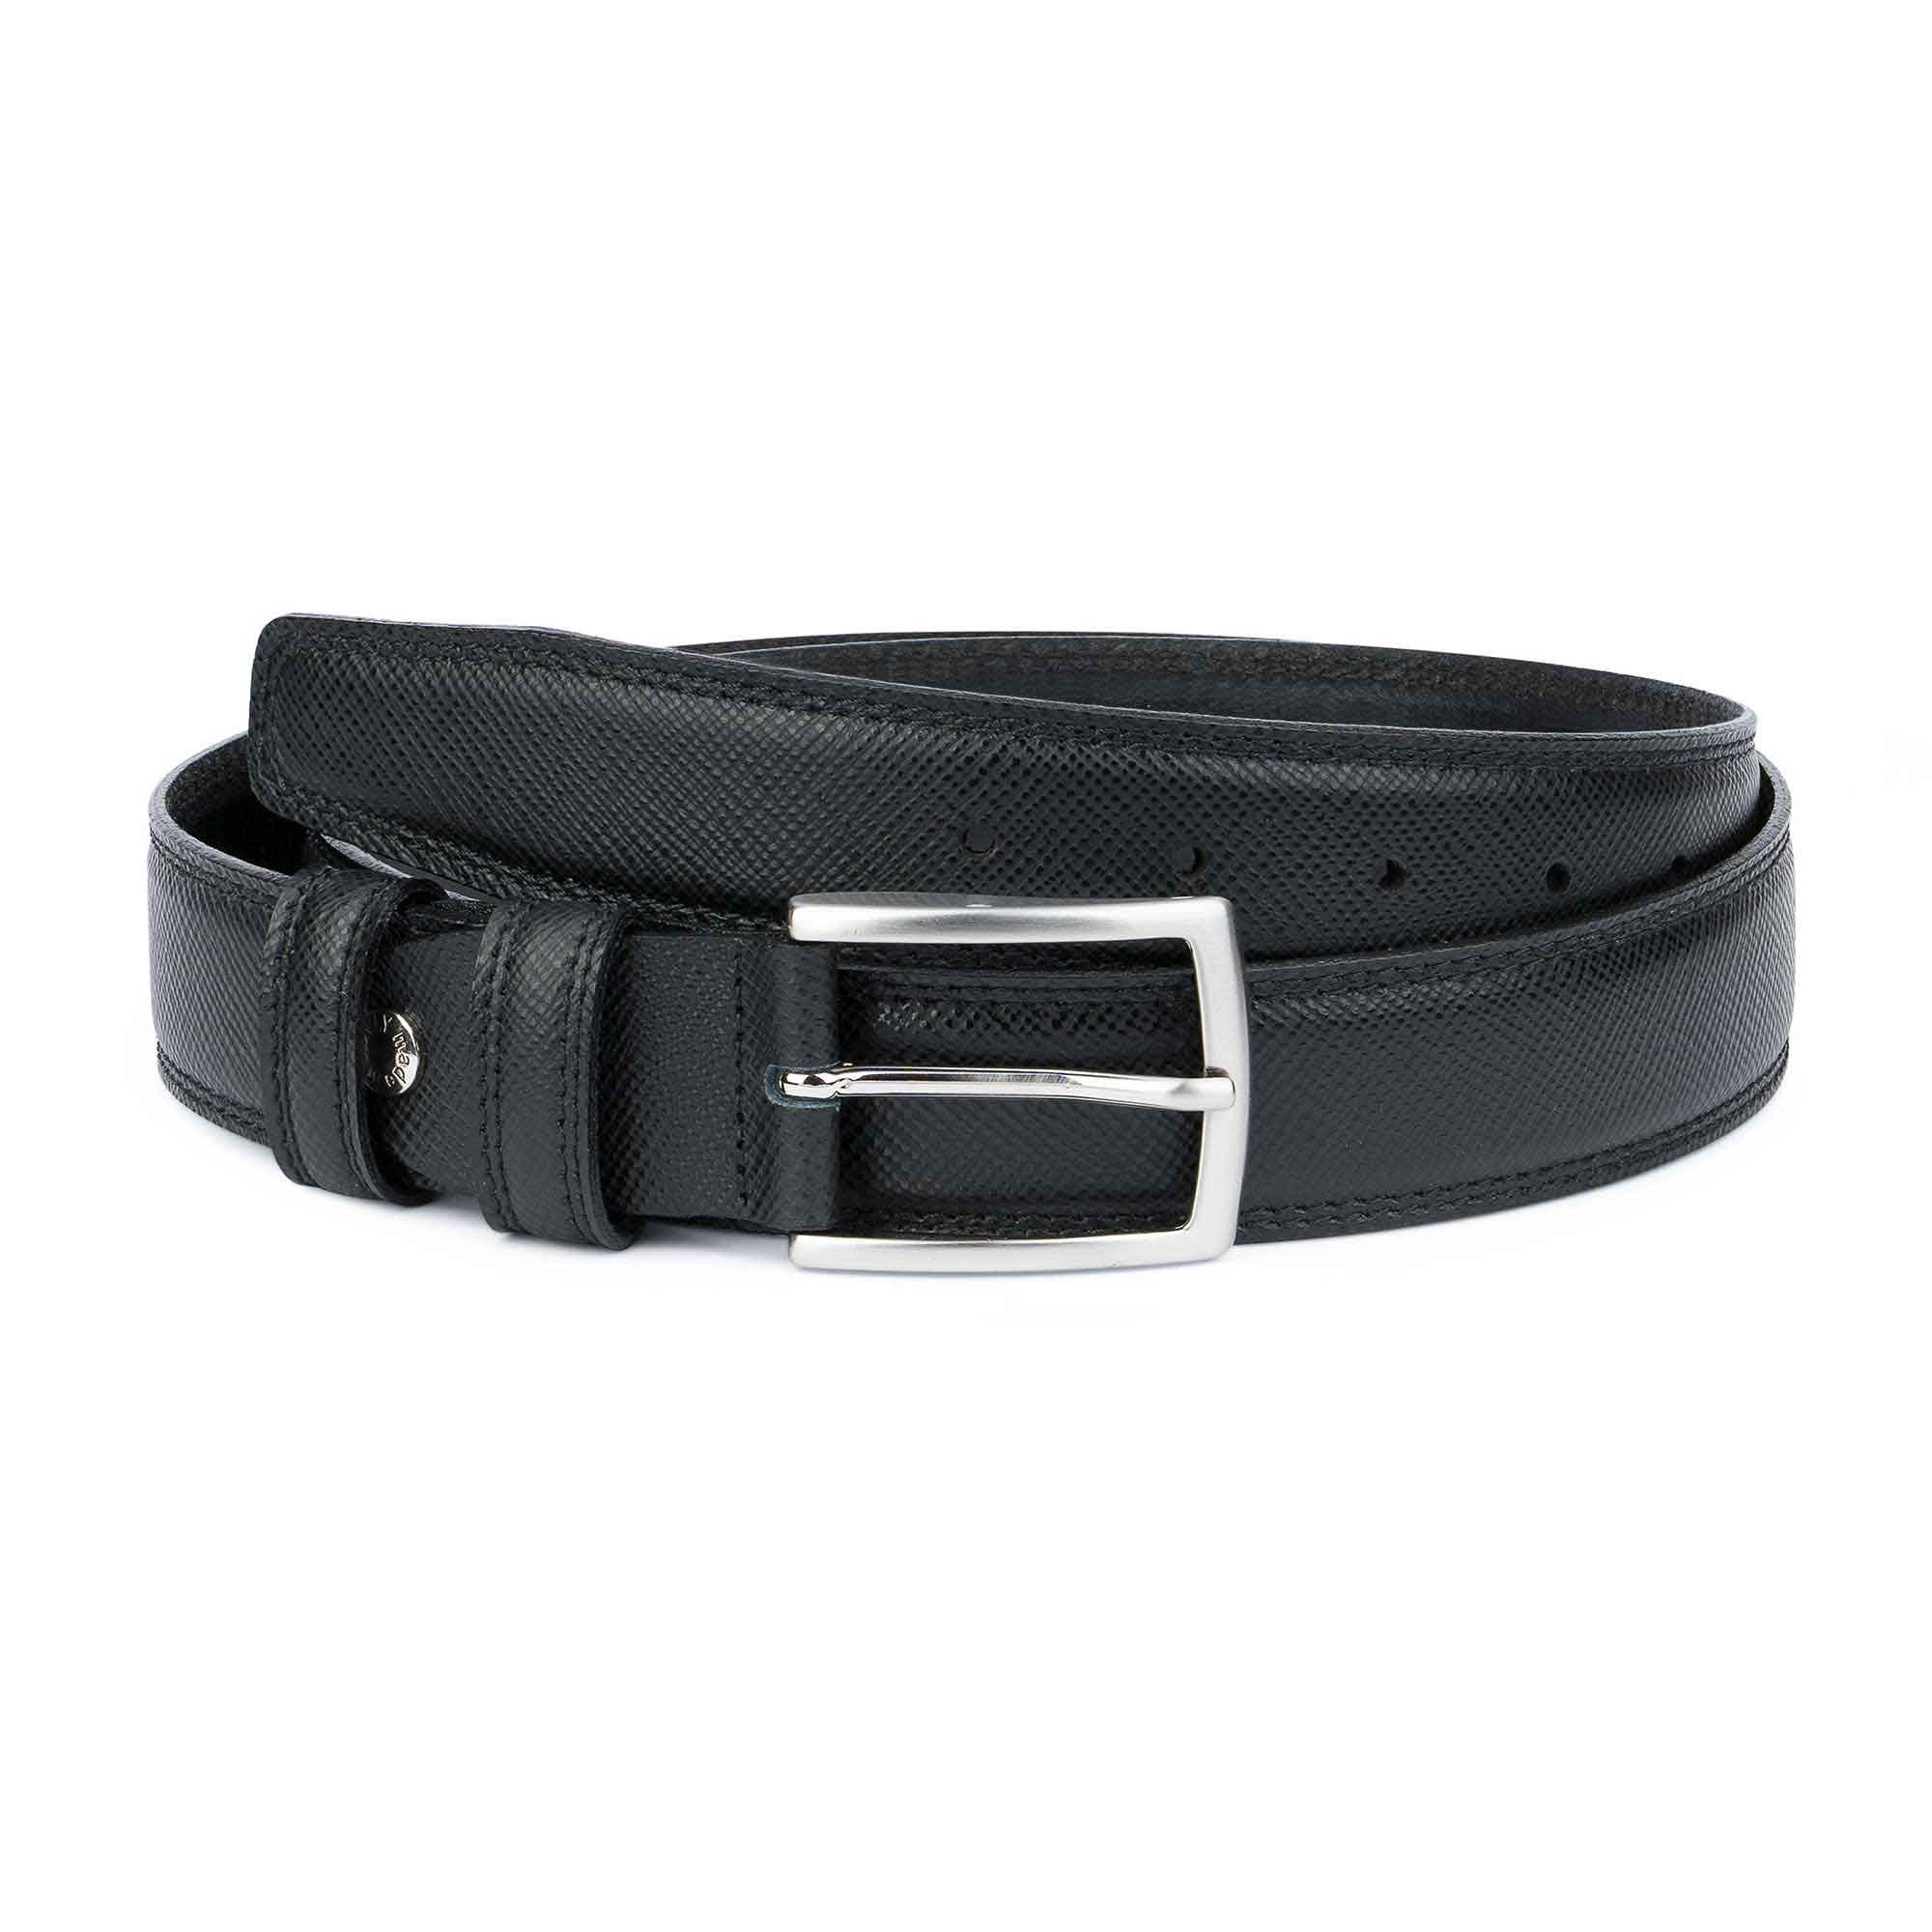 Men's leather belt Black saffiano 100% genuine calf skin Dress belts ...